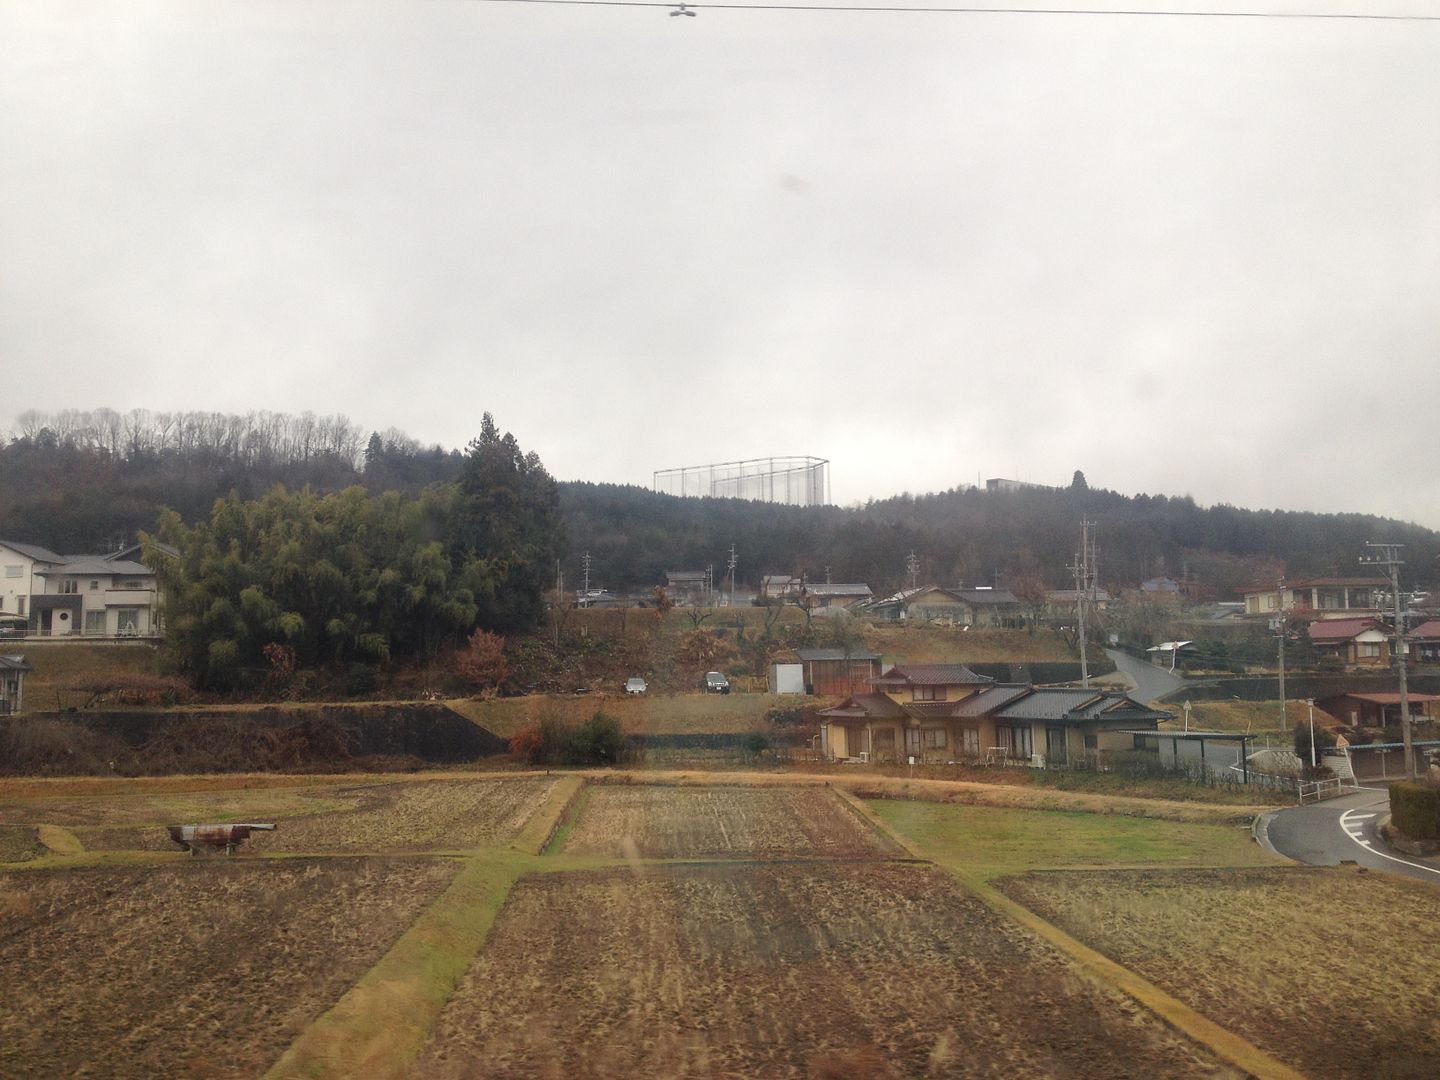 Train to Kyoto photo 2013-12-21111301_zps9759fbe2.jpg